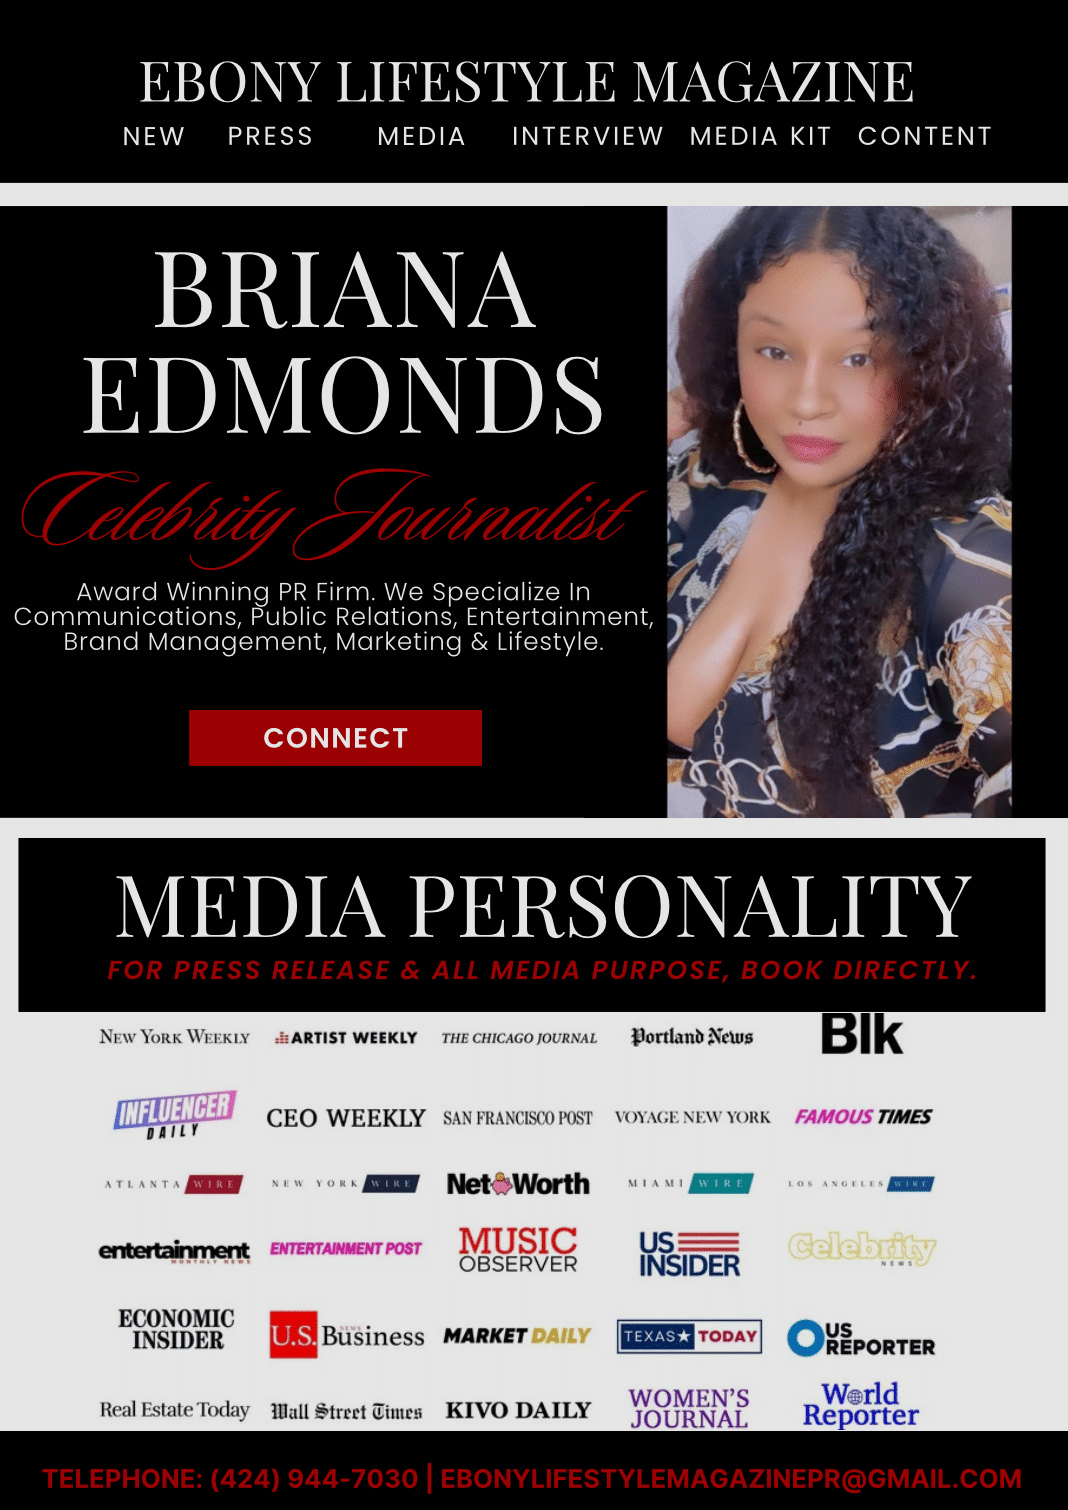 Briana Edmonds Inspires Stories in Ebony Lifestyle Magazine (3)